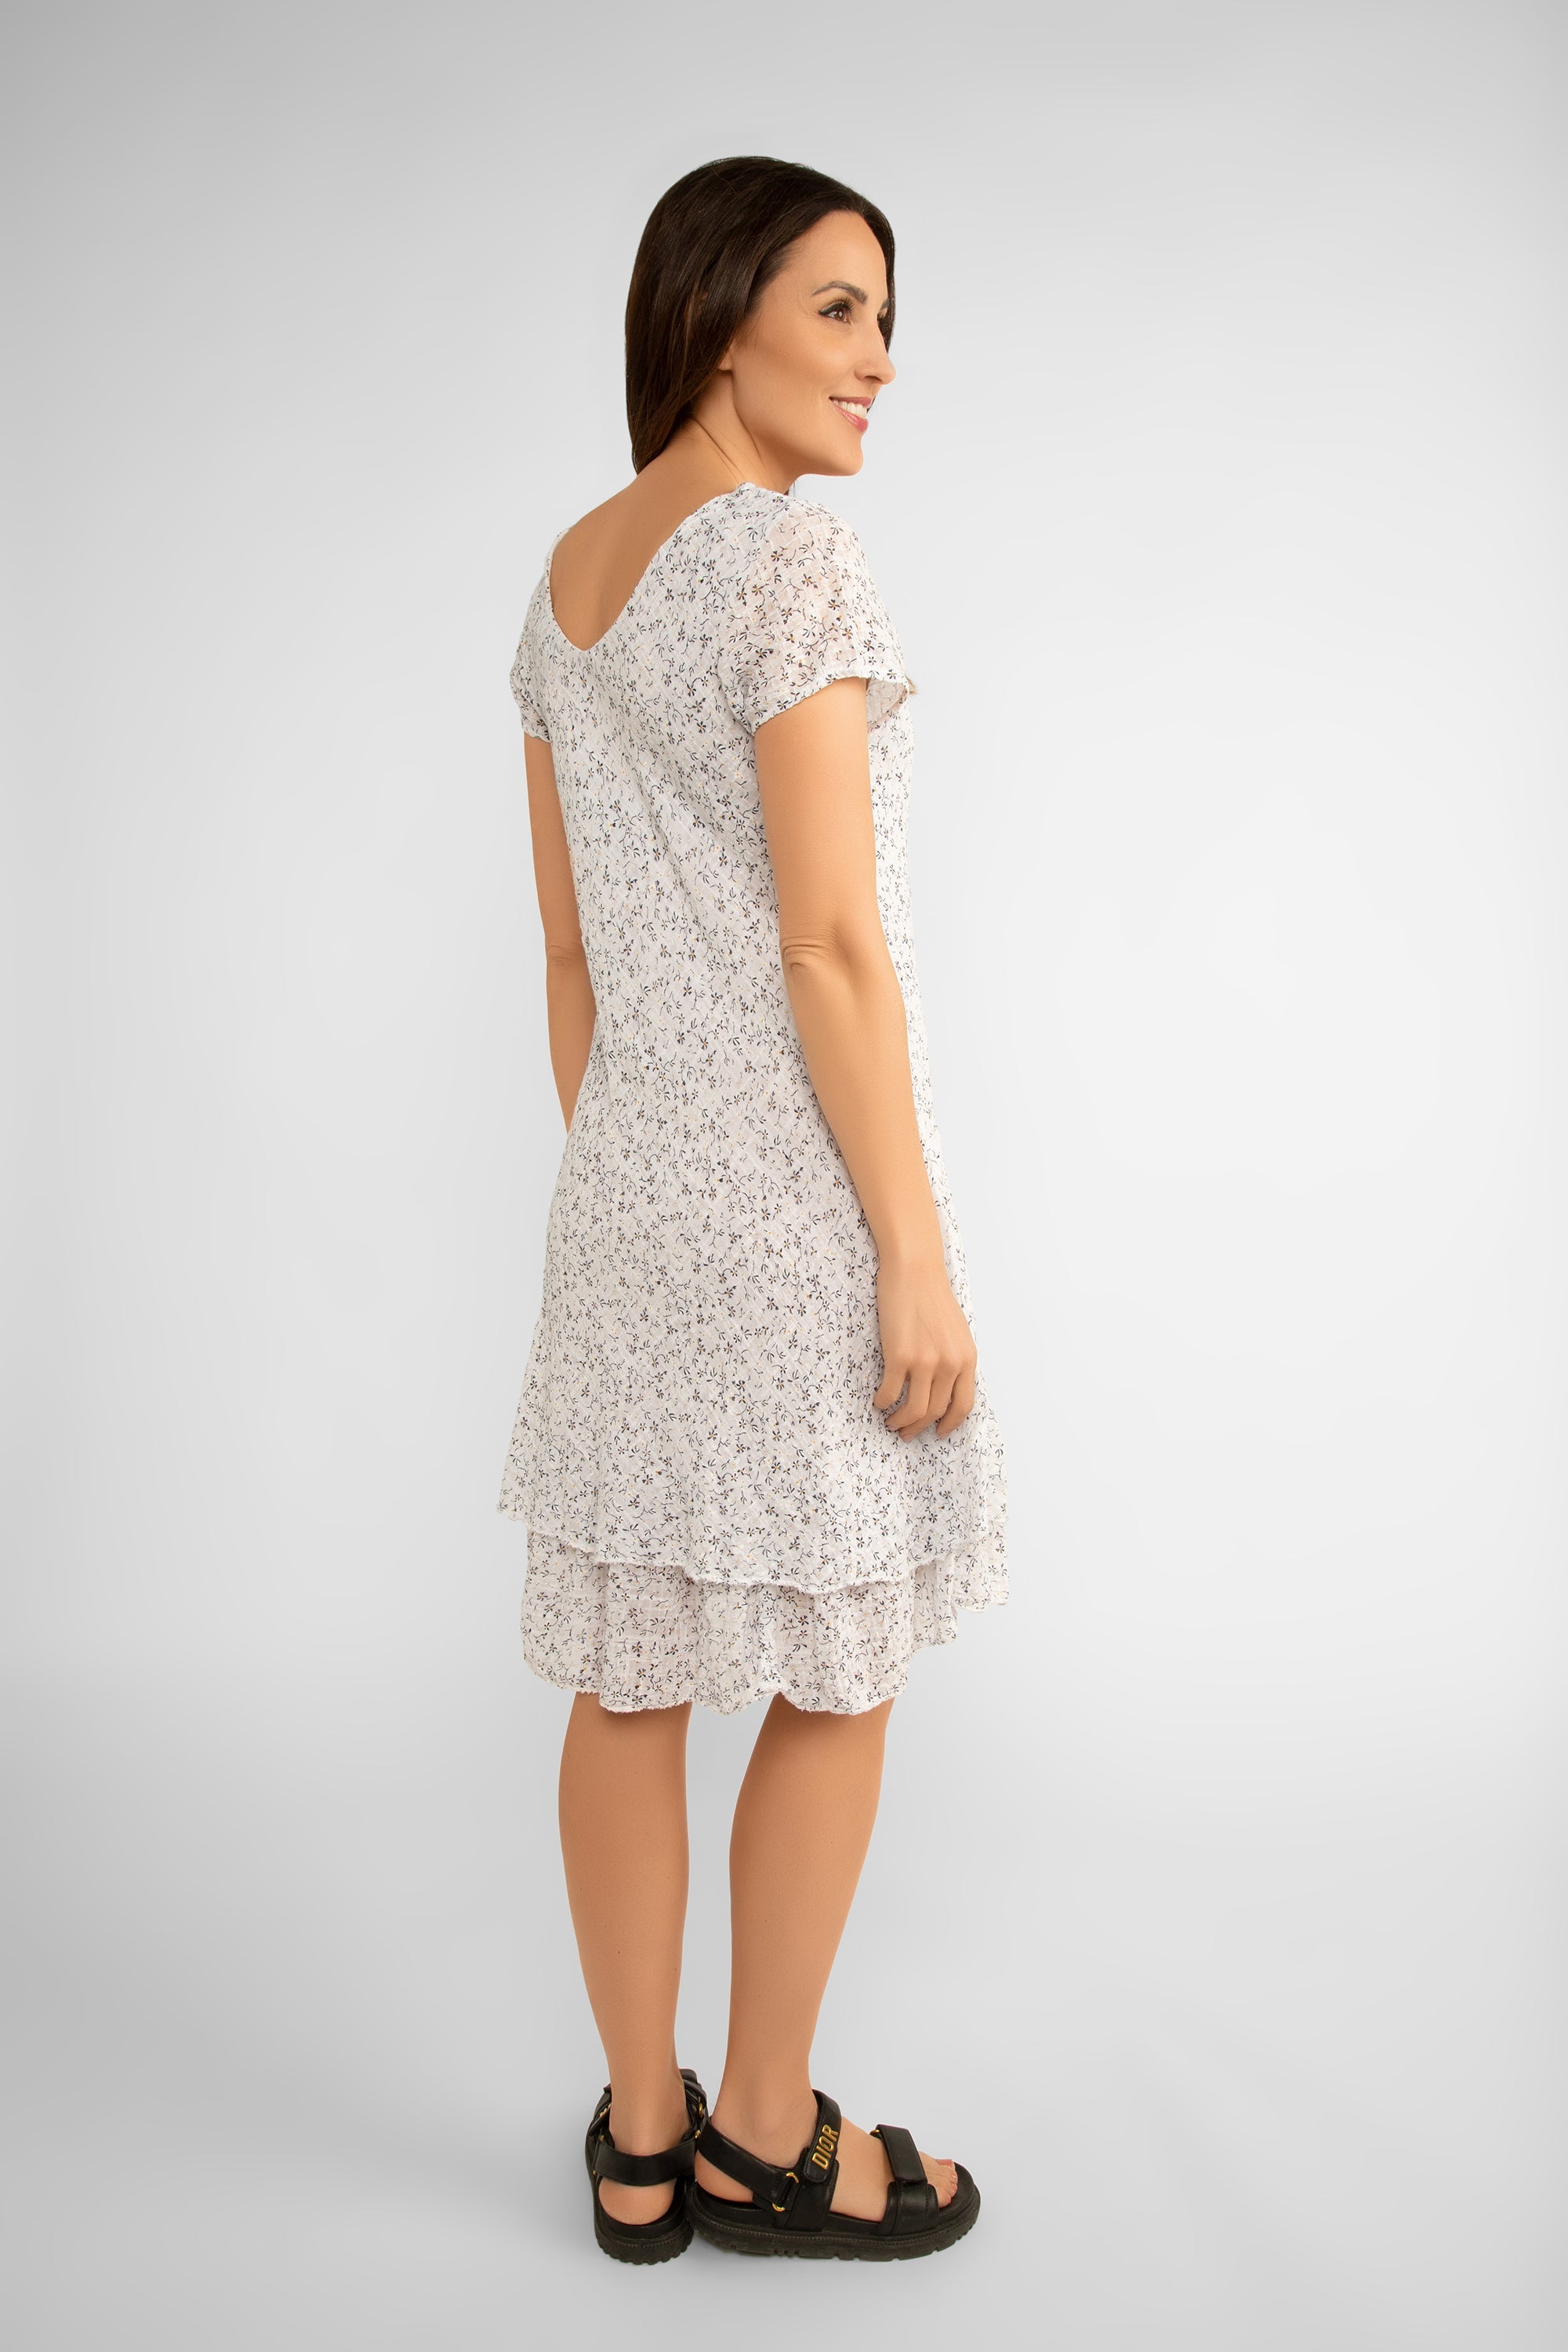 Back view of Bella Amore (6859B) Women's Short Sleeve V-Neck Knee Length Skirt in White Ditsy Floral Print